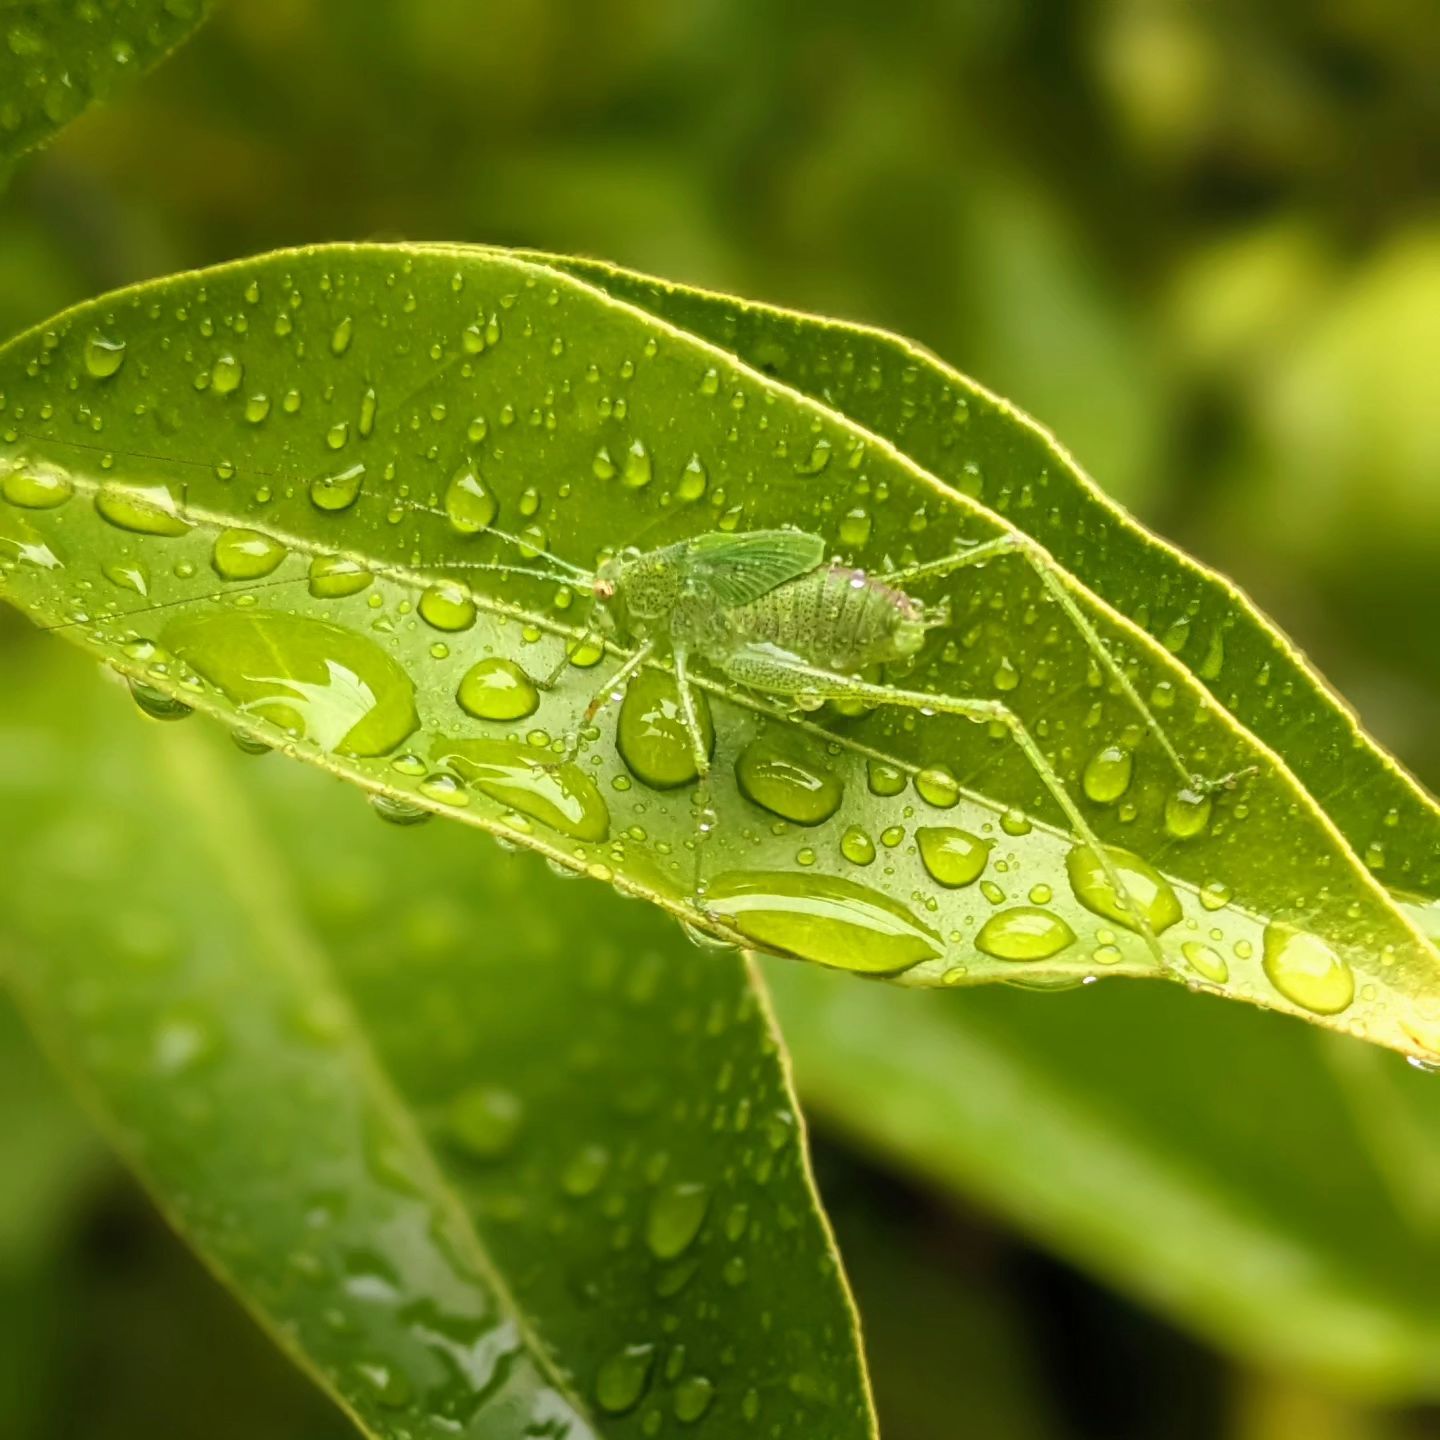 A green insect enjoying the rain